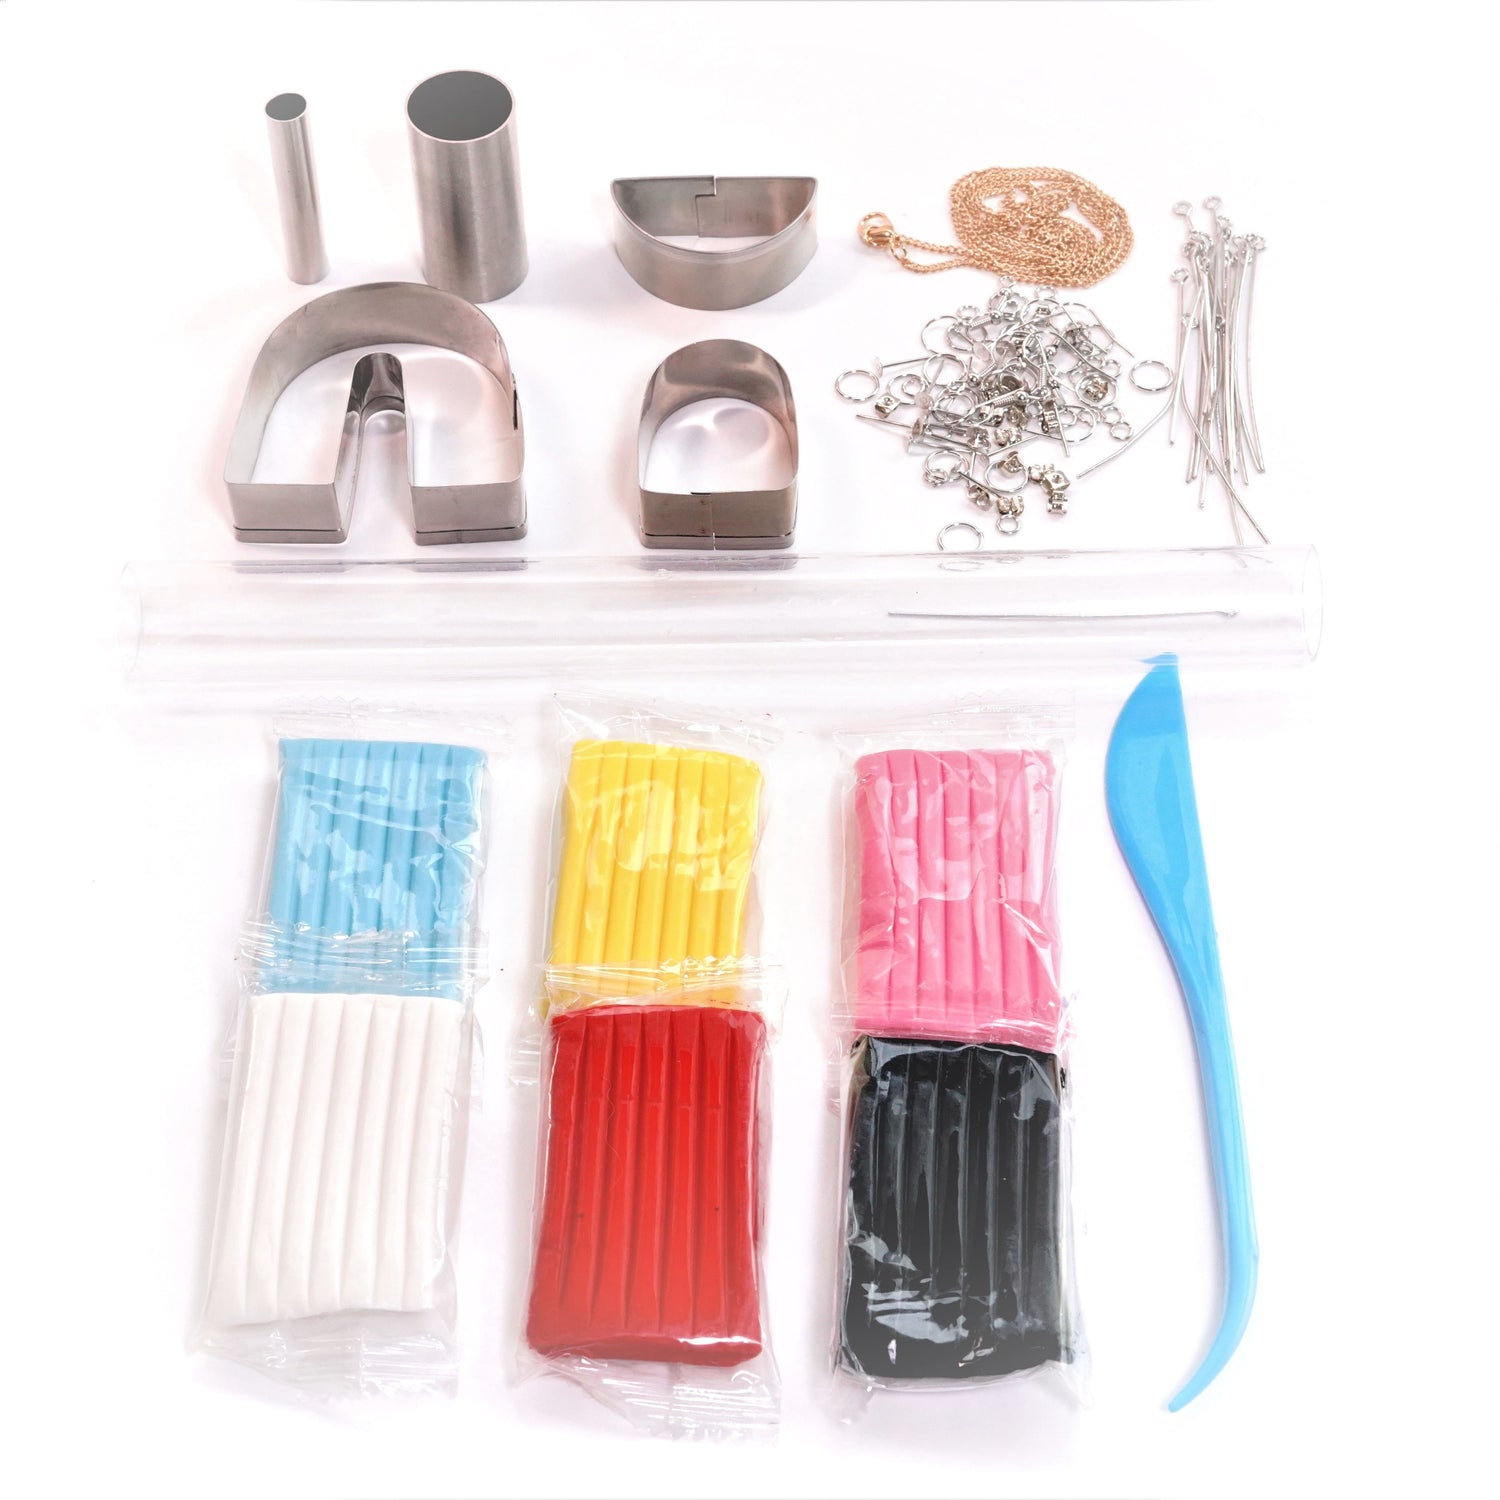 KEOKER 123 Polymer Clay Earrings Making Kit, Ultimate Clay Starter Kit